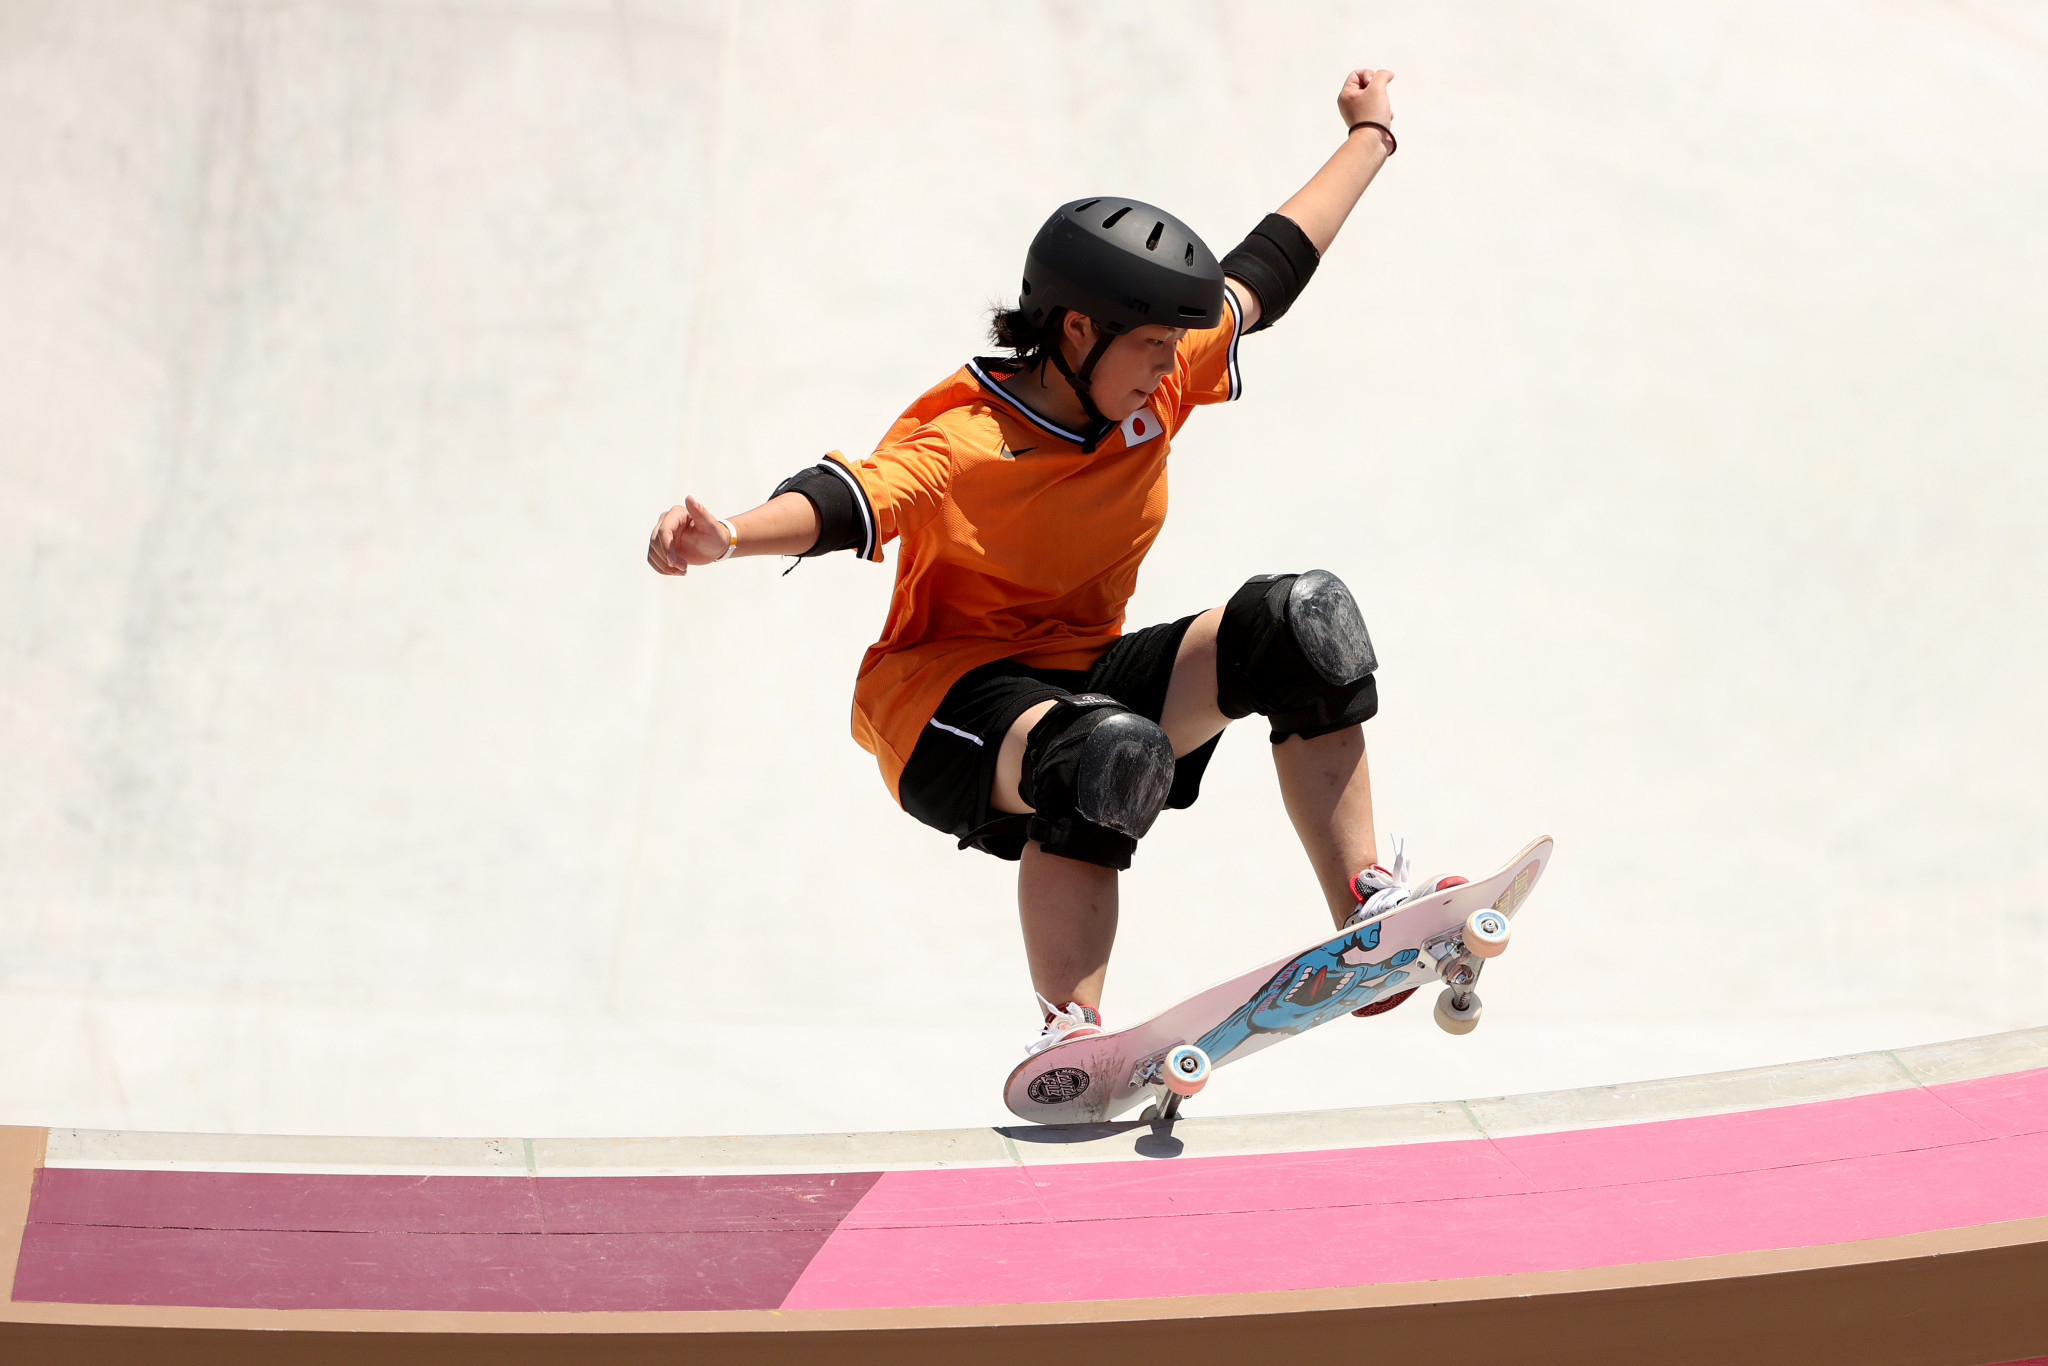 Women's park skateboarders win Tokyo 2020 Fair Play Award for reaction to Okamoto crash